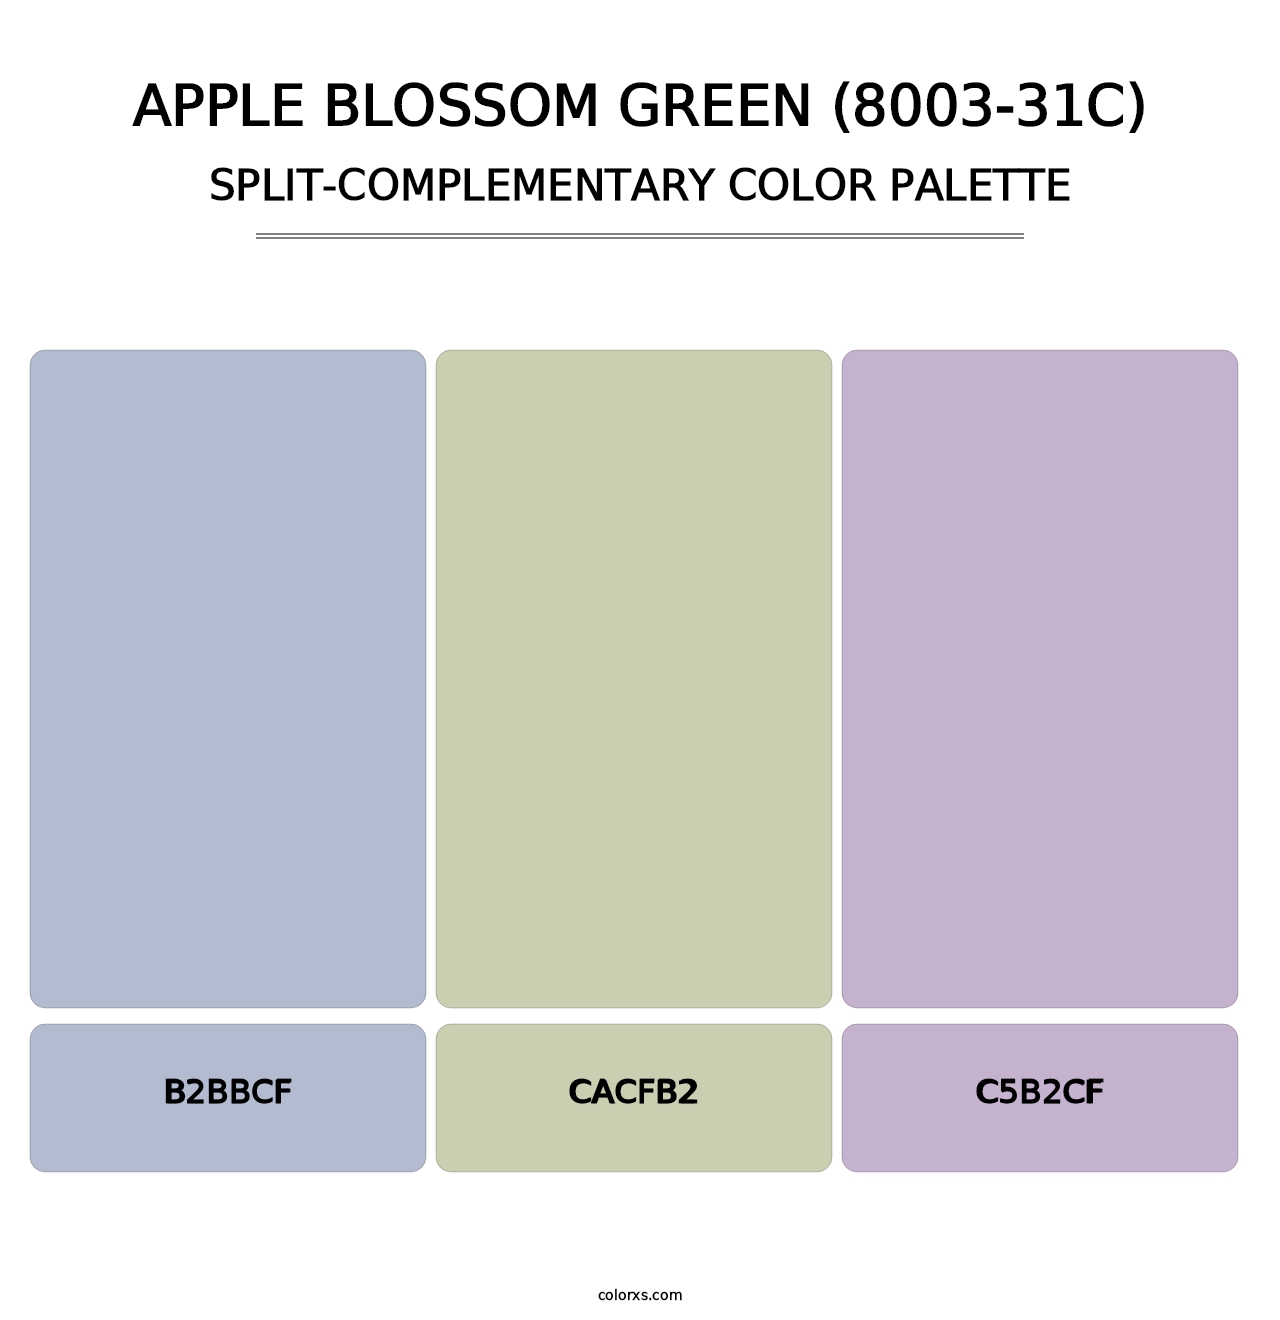 Apple Blossom Green (8003-31C) - Split-Complementary Color Palette